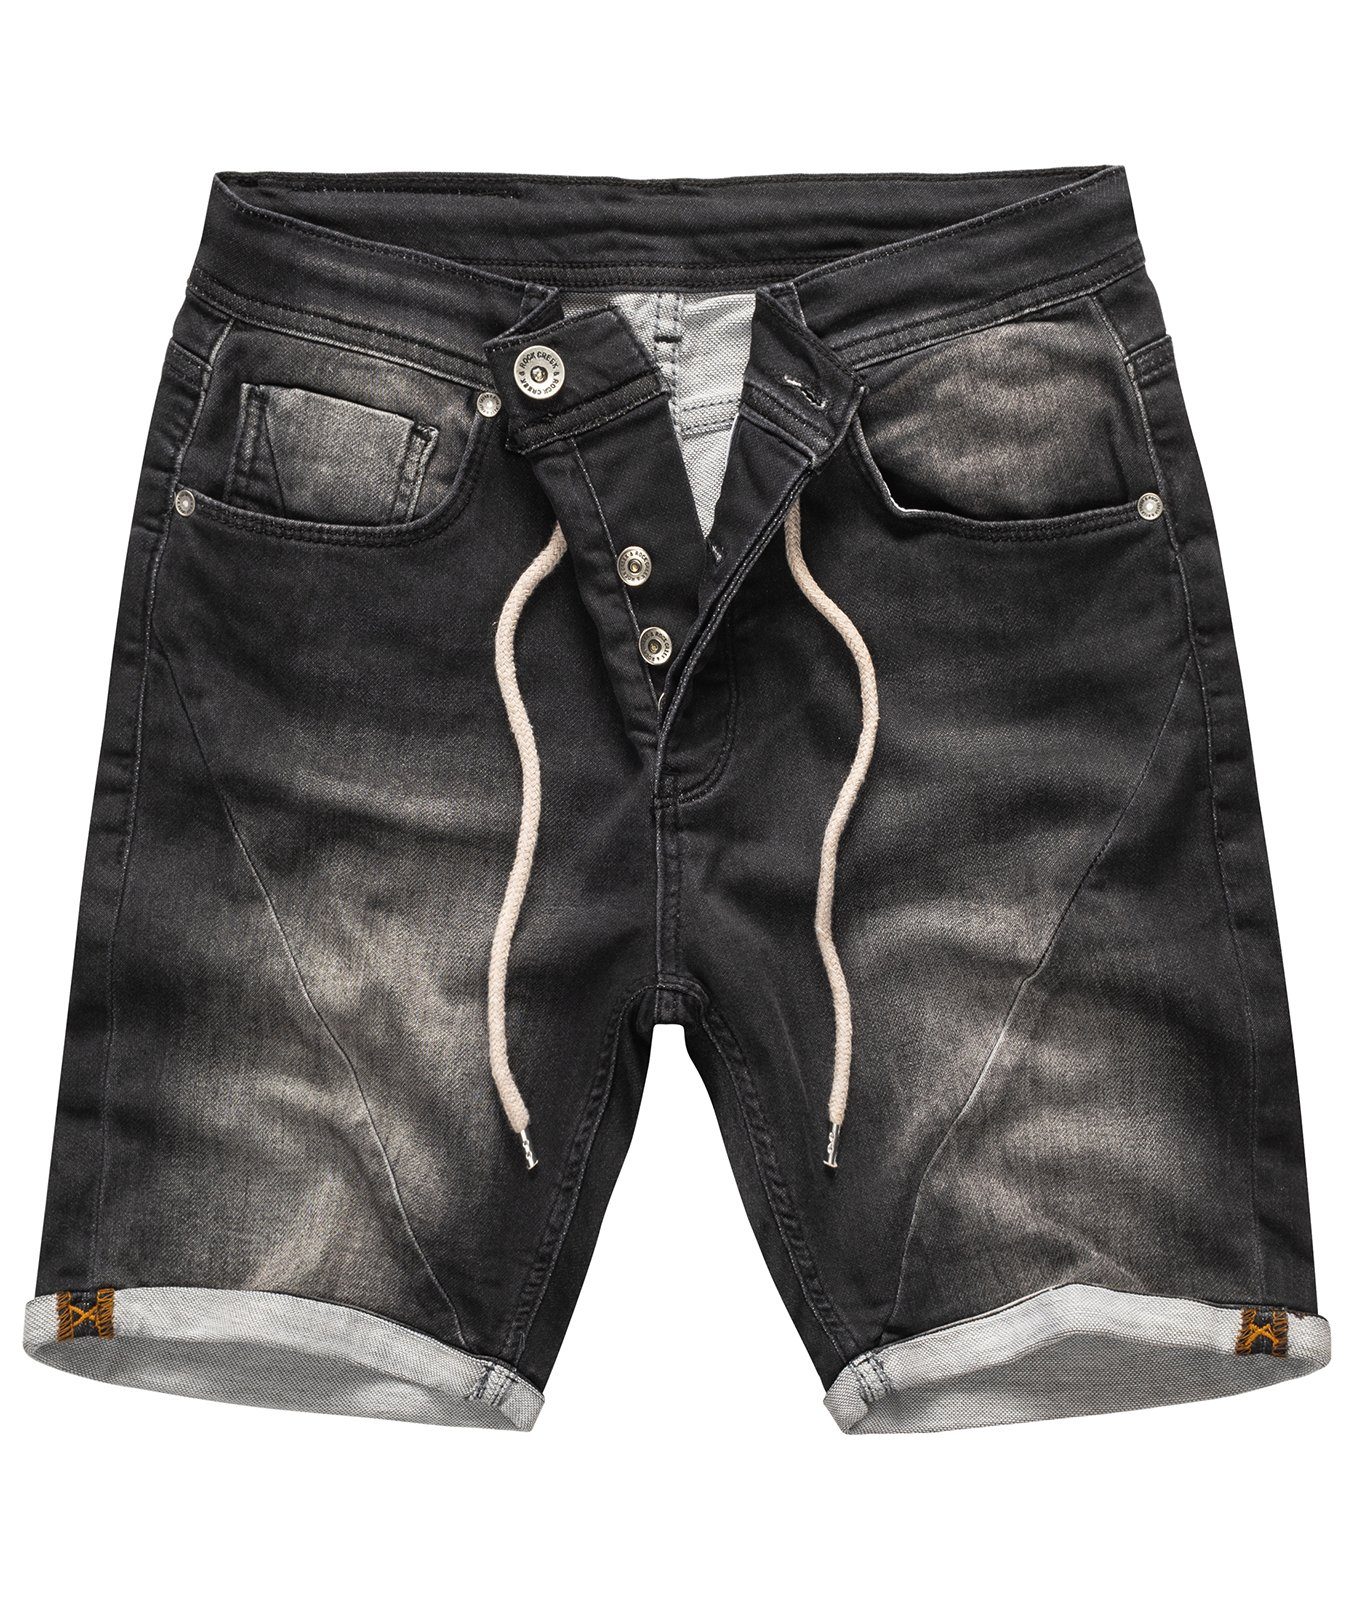 Shorts Rock Anthrazit Herren Shorts Jeans RC-2200 Sweat Creek Jeansshorts